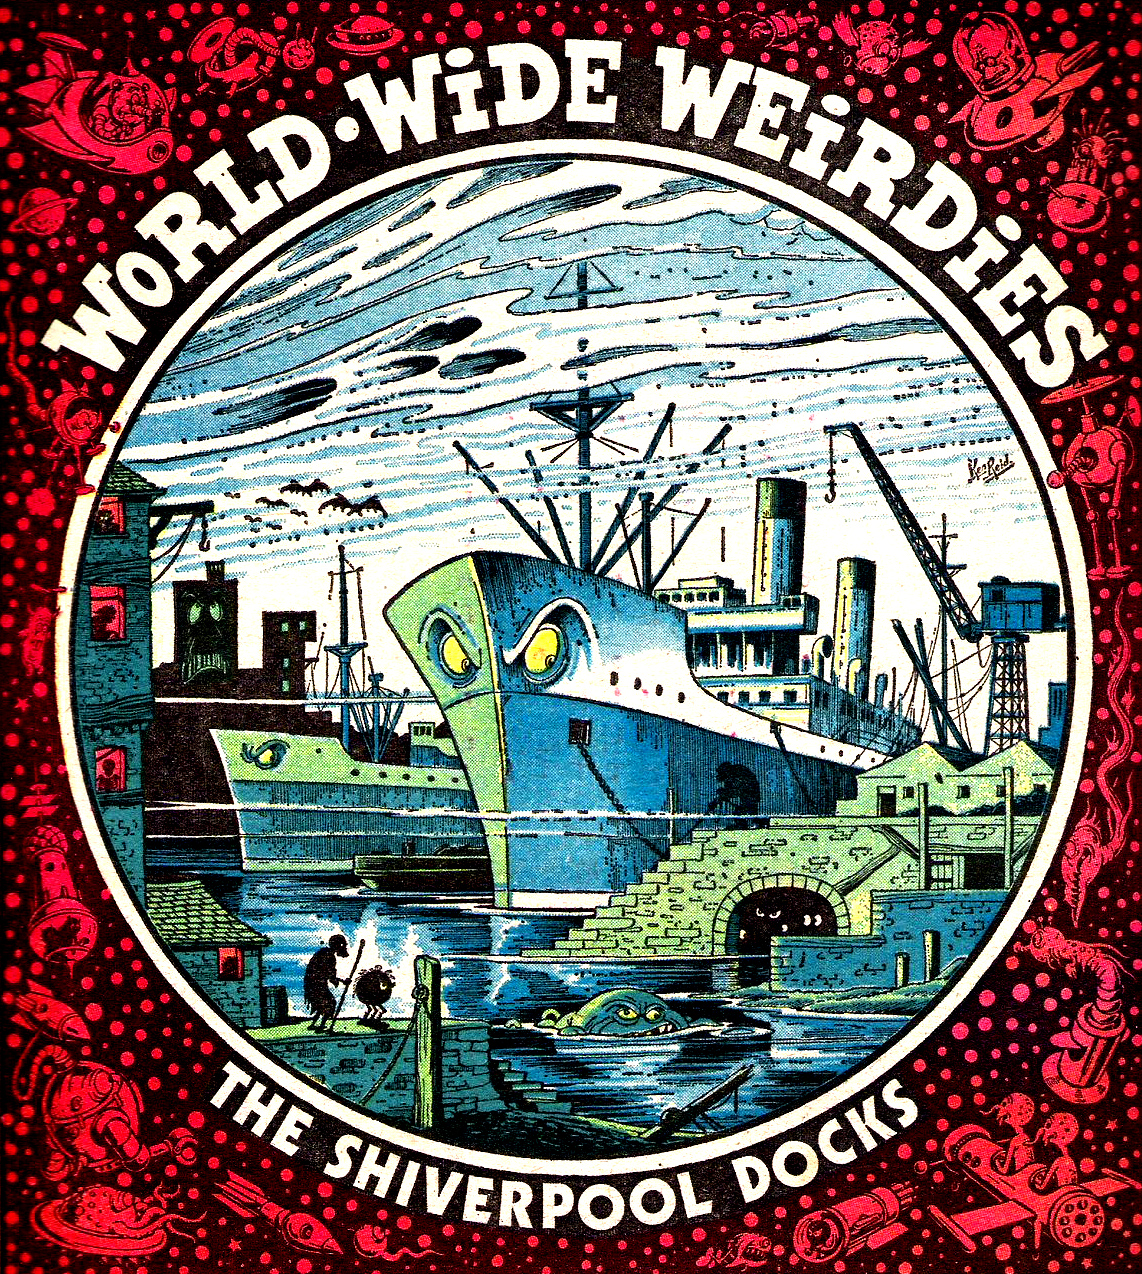 Ken Reid - World Wide Weirdies 49